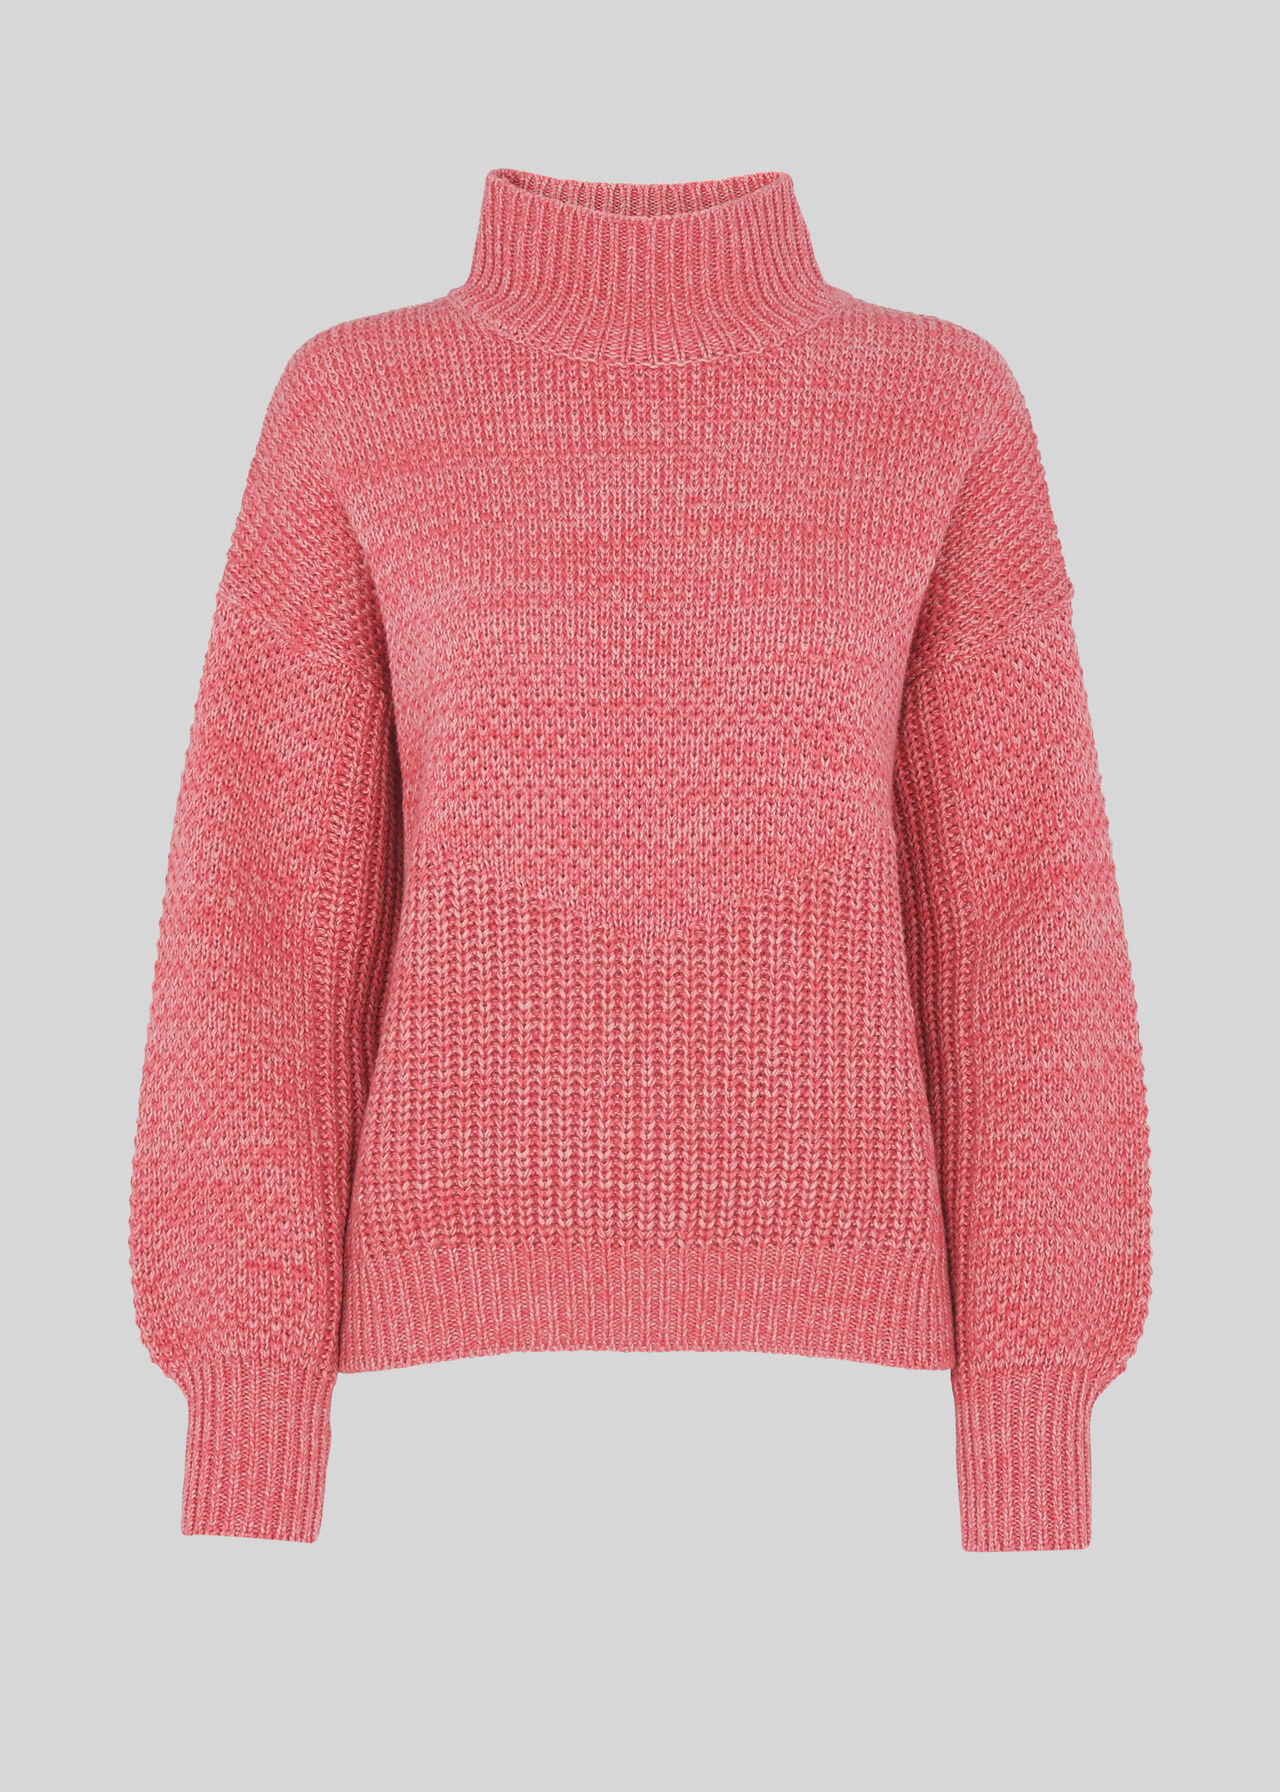 Moss Stitch Textured Knit Pink